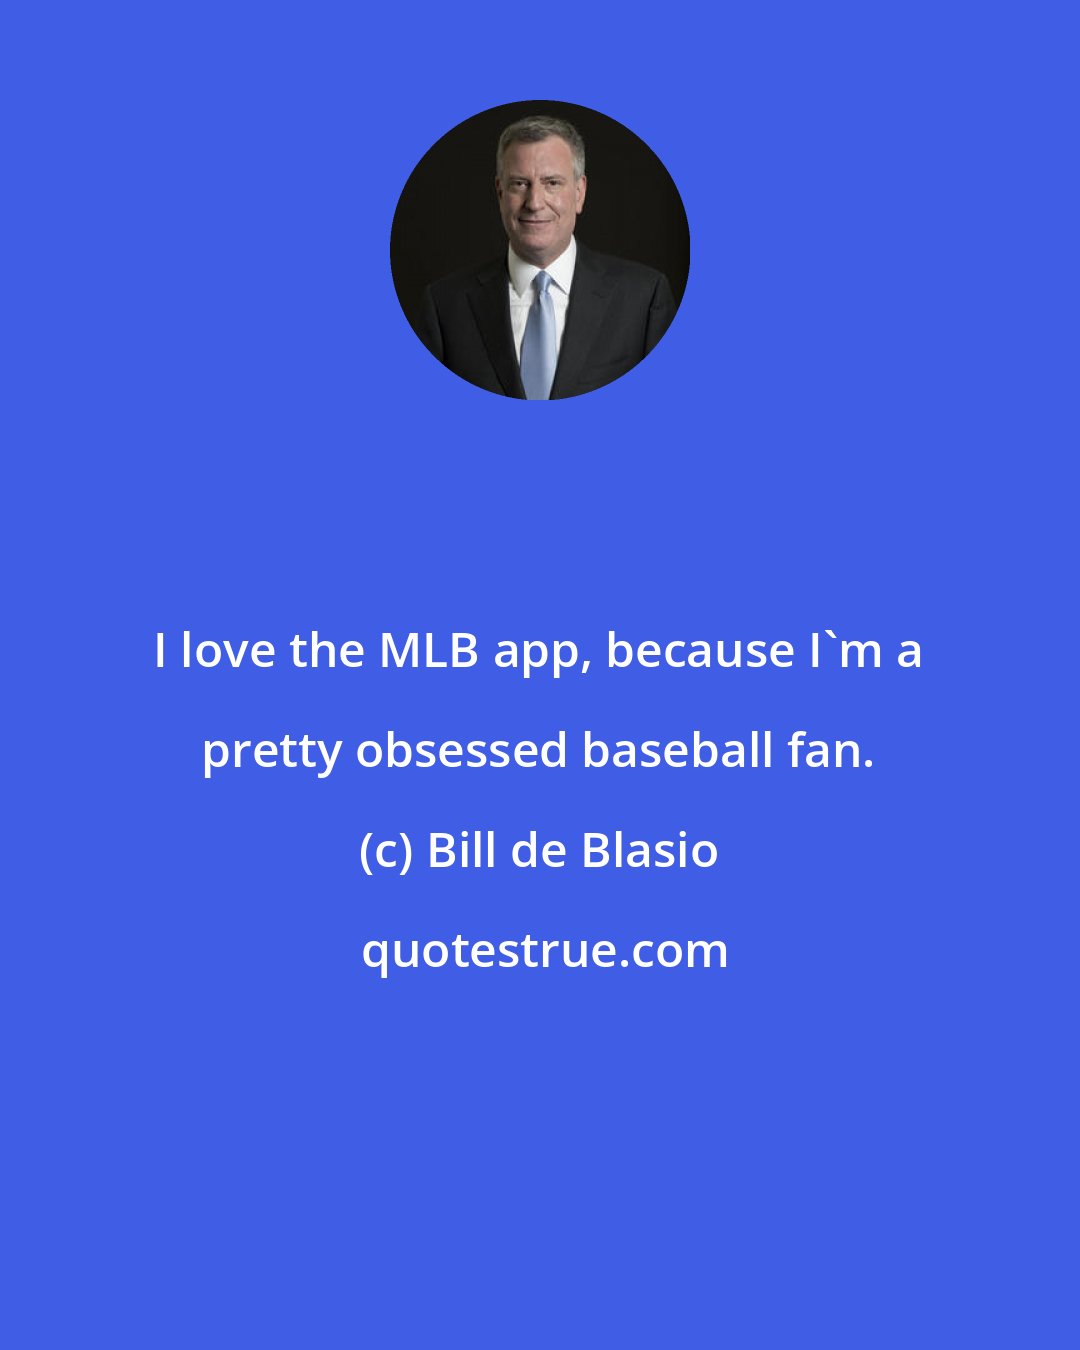 Bill de Blasio: I love the MLB app, because I'm a pretty obsessed baseball fan.